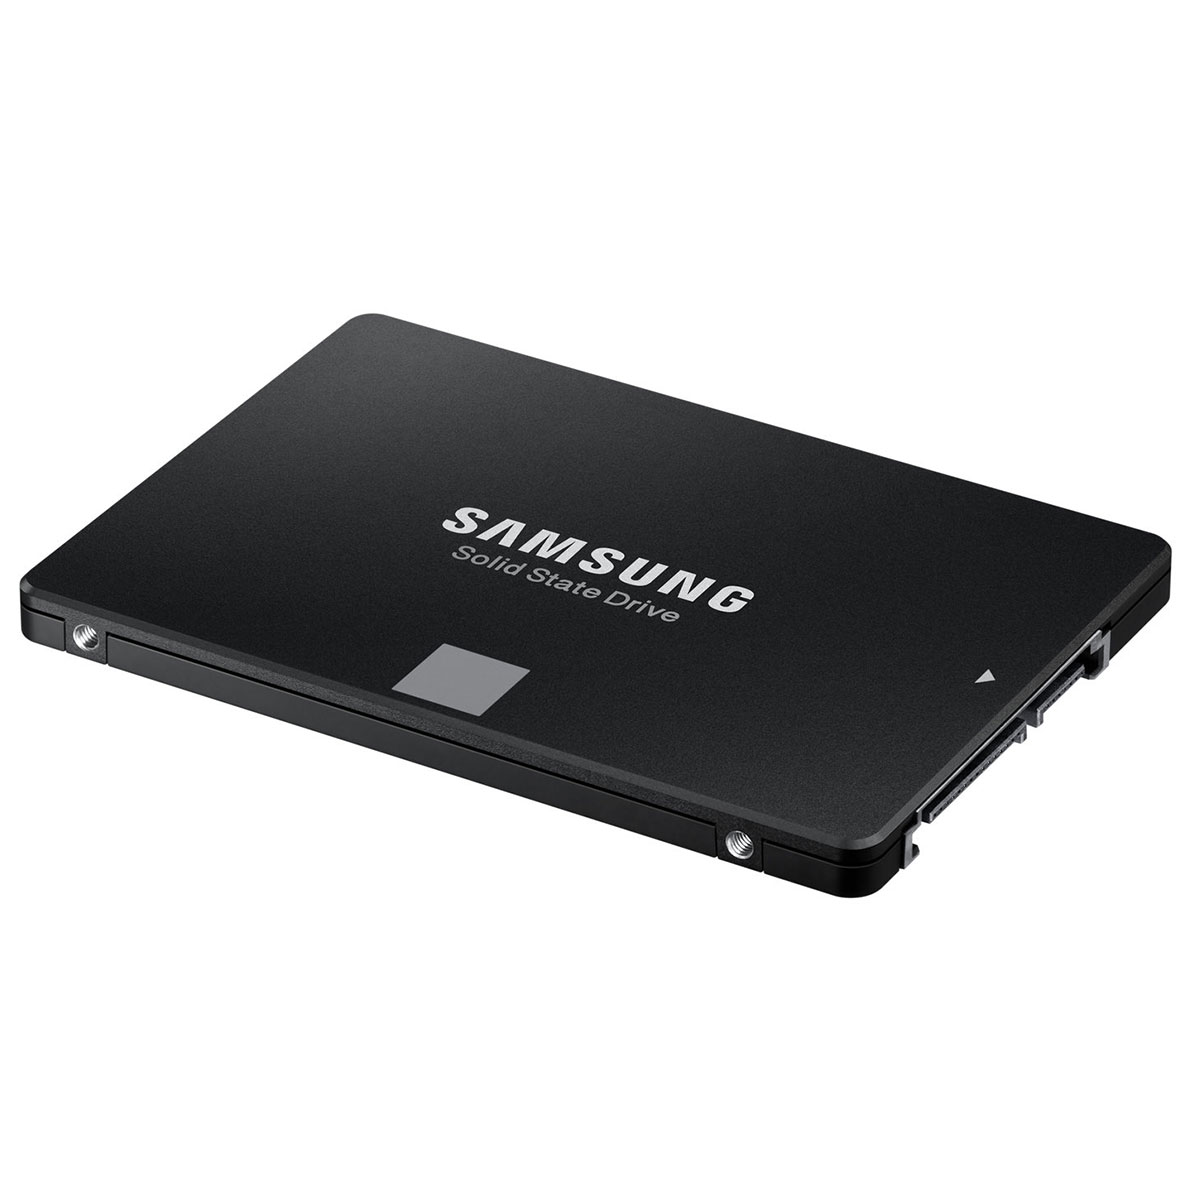 Samsung SSD 860 EVO 250 G